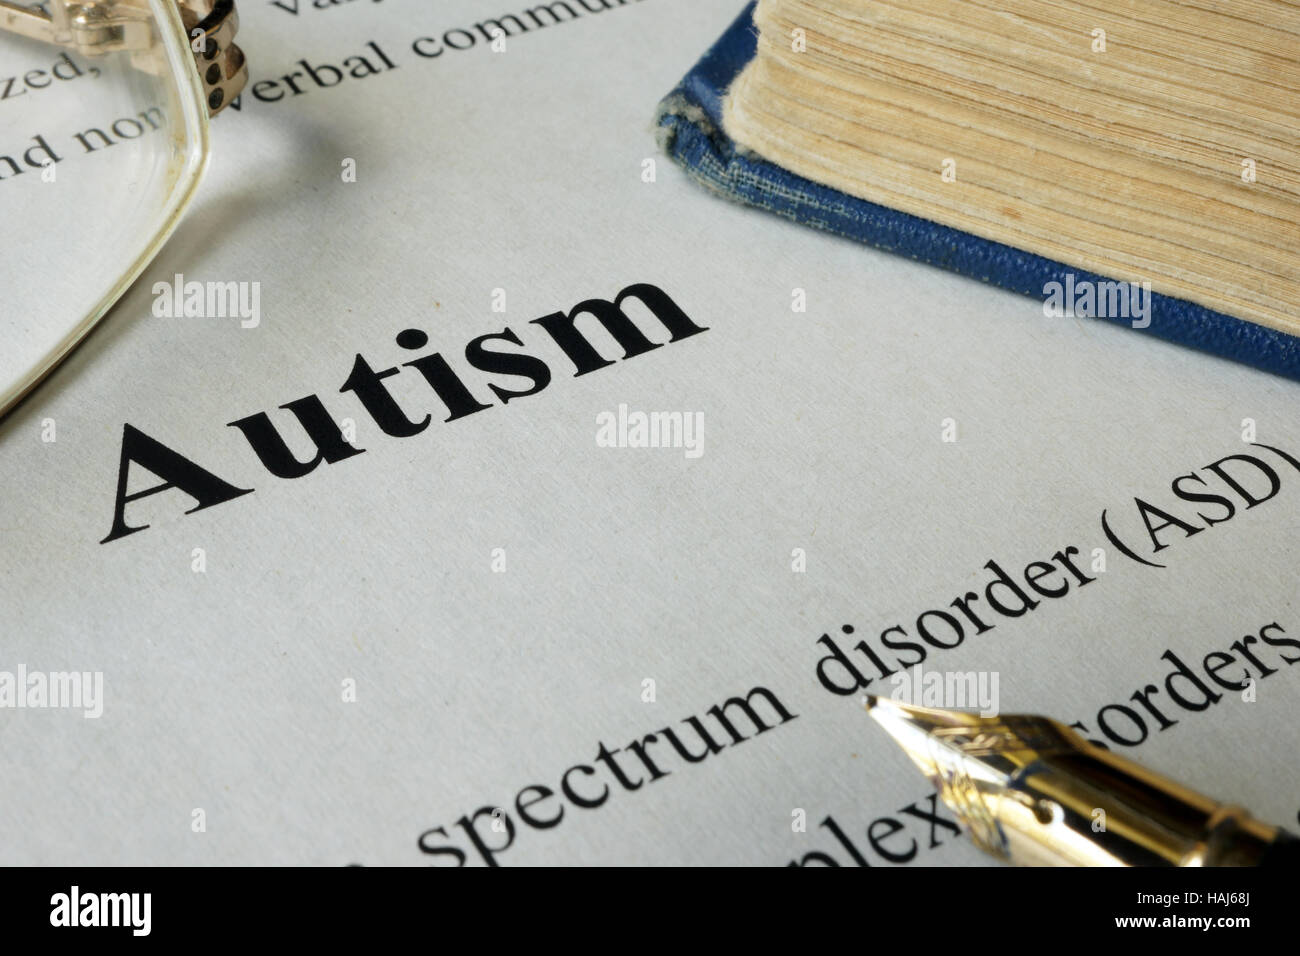 Autism spectrum disorder ASD written on a paper. Stock Photo